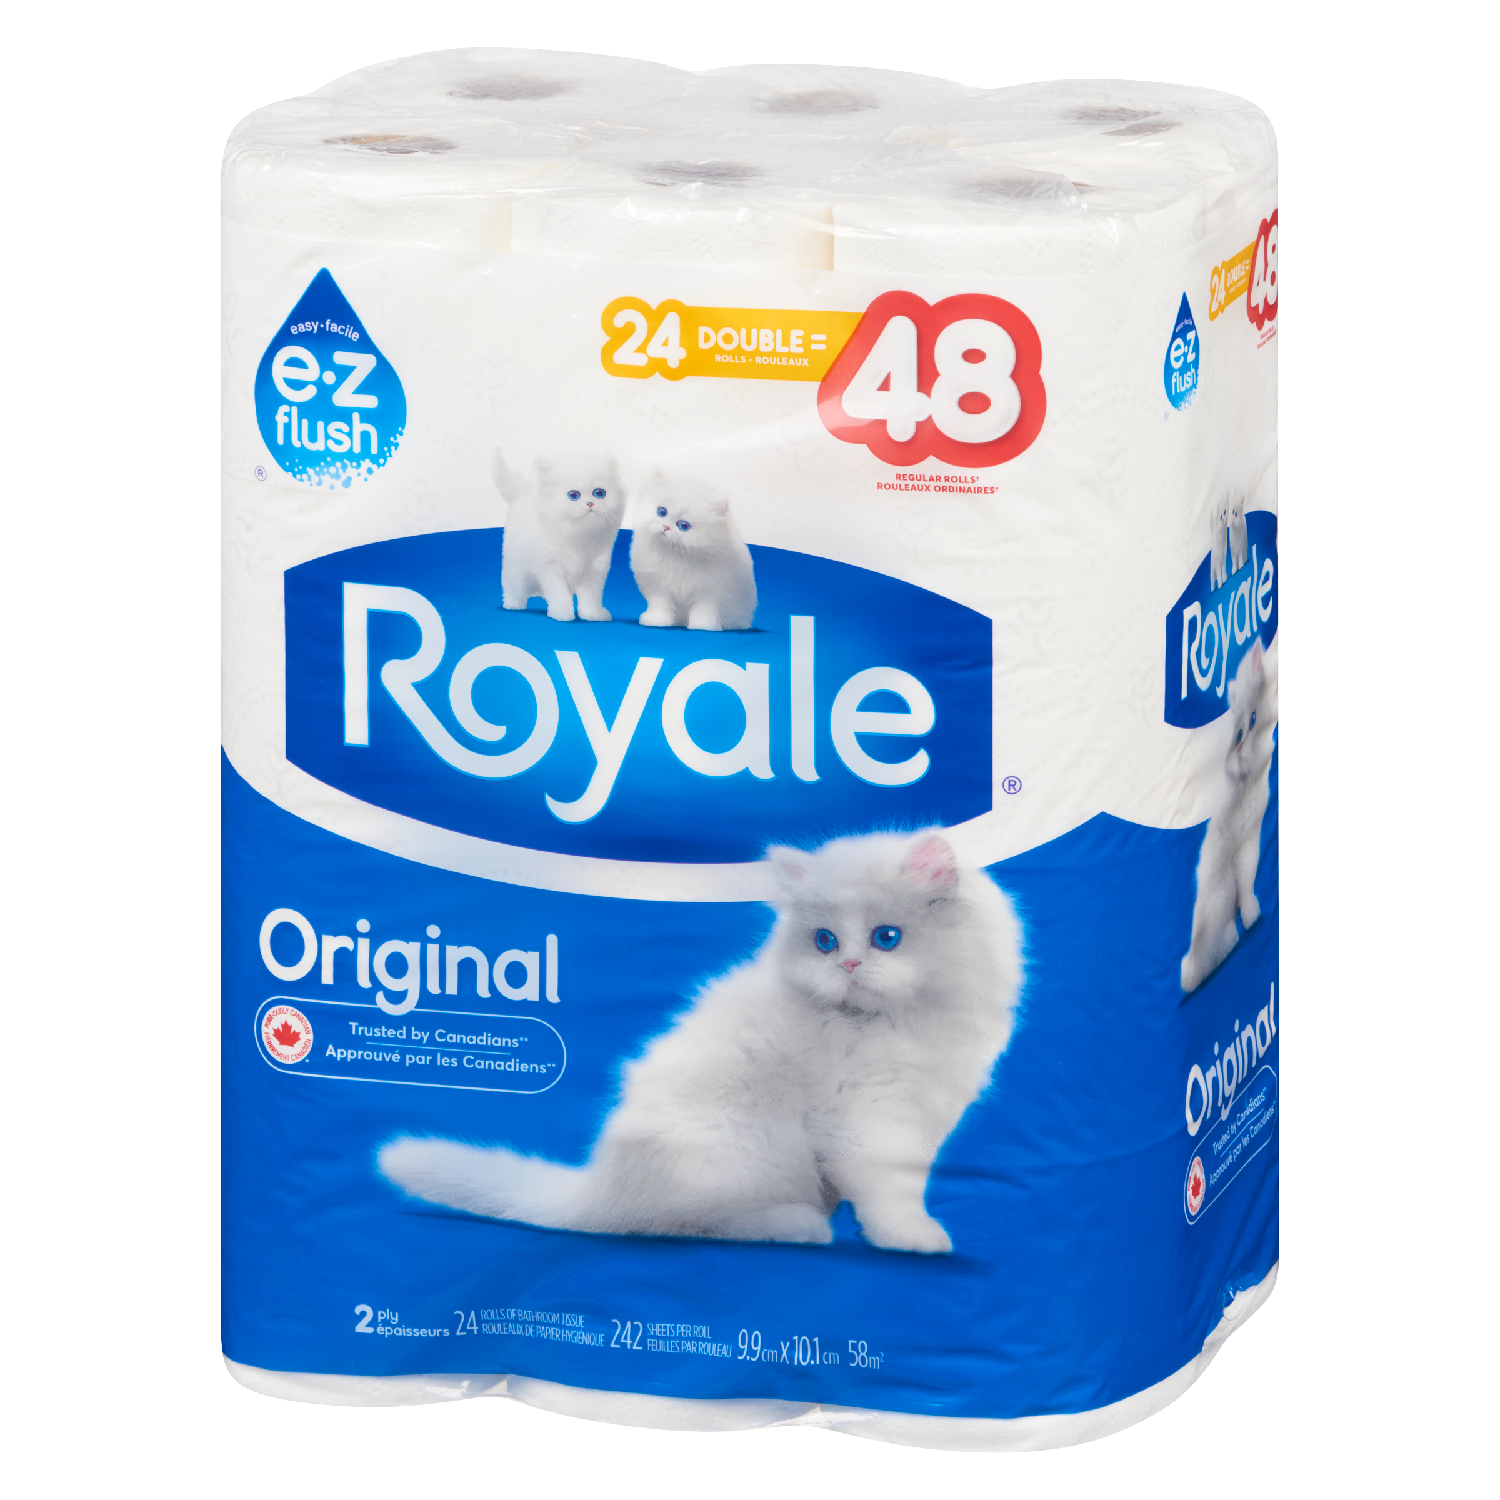 Royale Toilet Paper 24DR=48R 2Ply 242S (24Rolls)